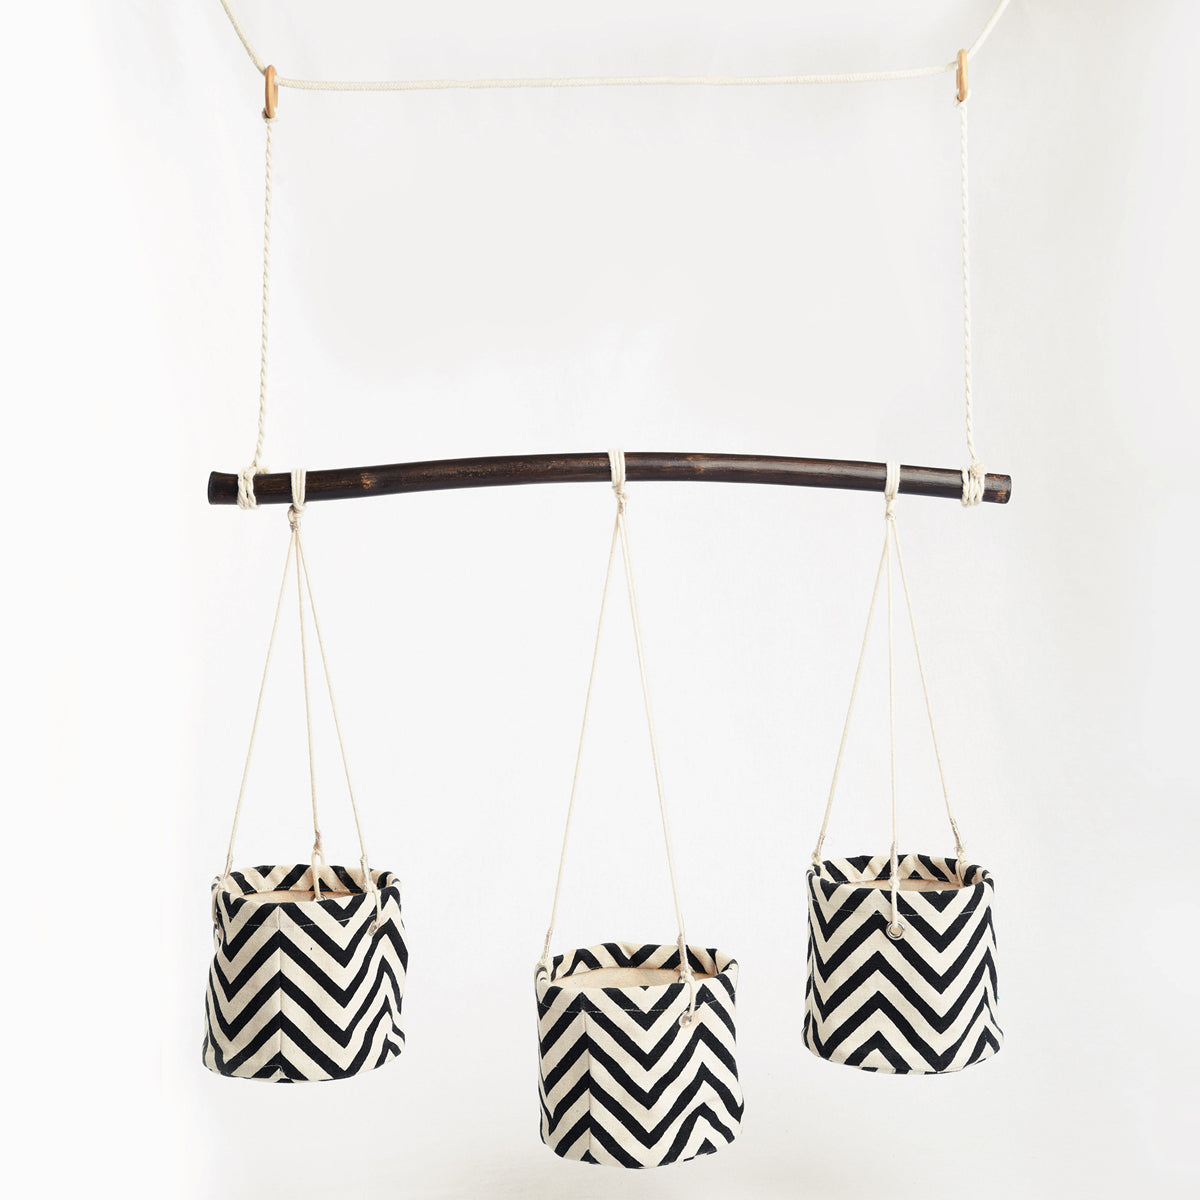 Canvas plant hanger, set of 3 baskets, chevron print, black and white, cotton canvas fabric